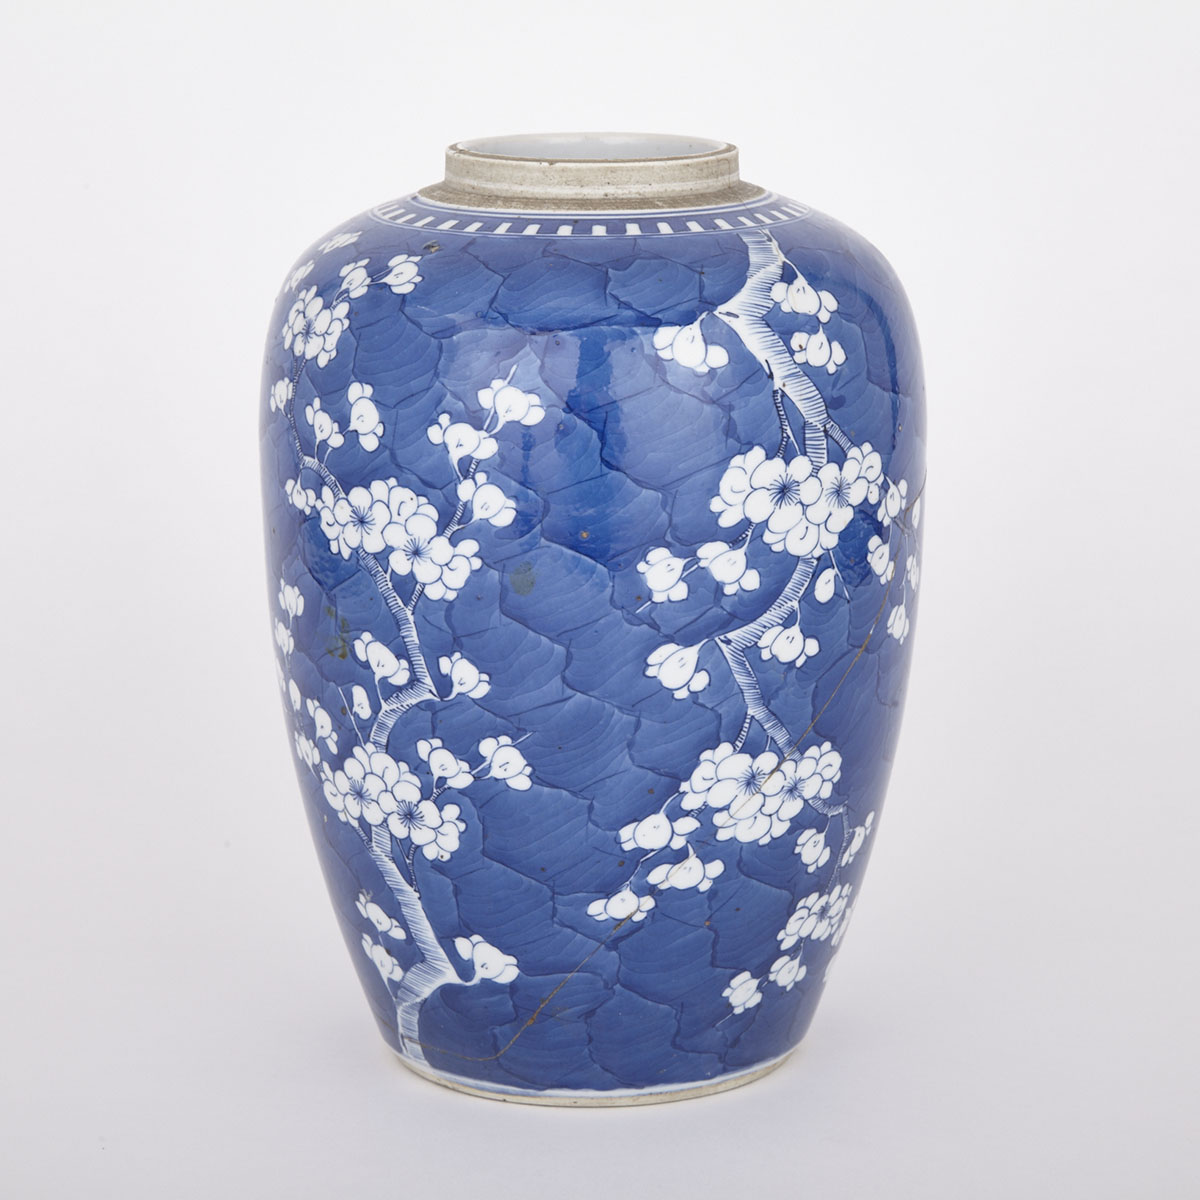 A Blue and White Prunus Jar, 18th Century